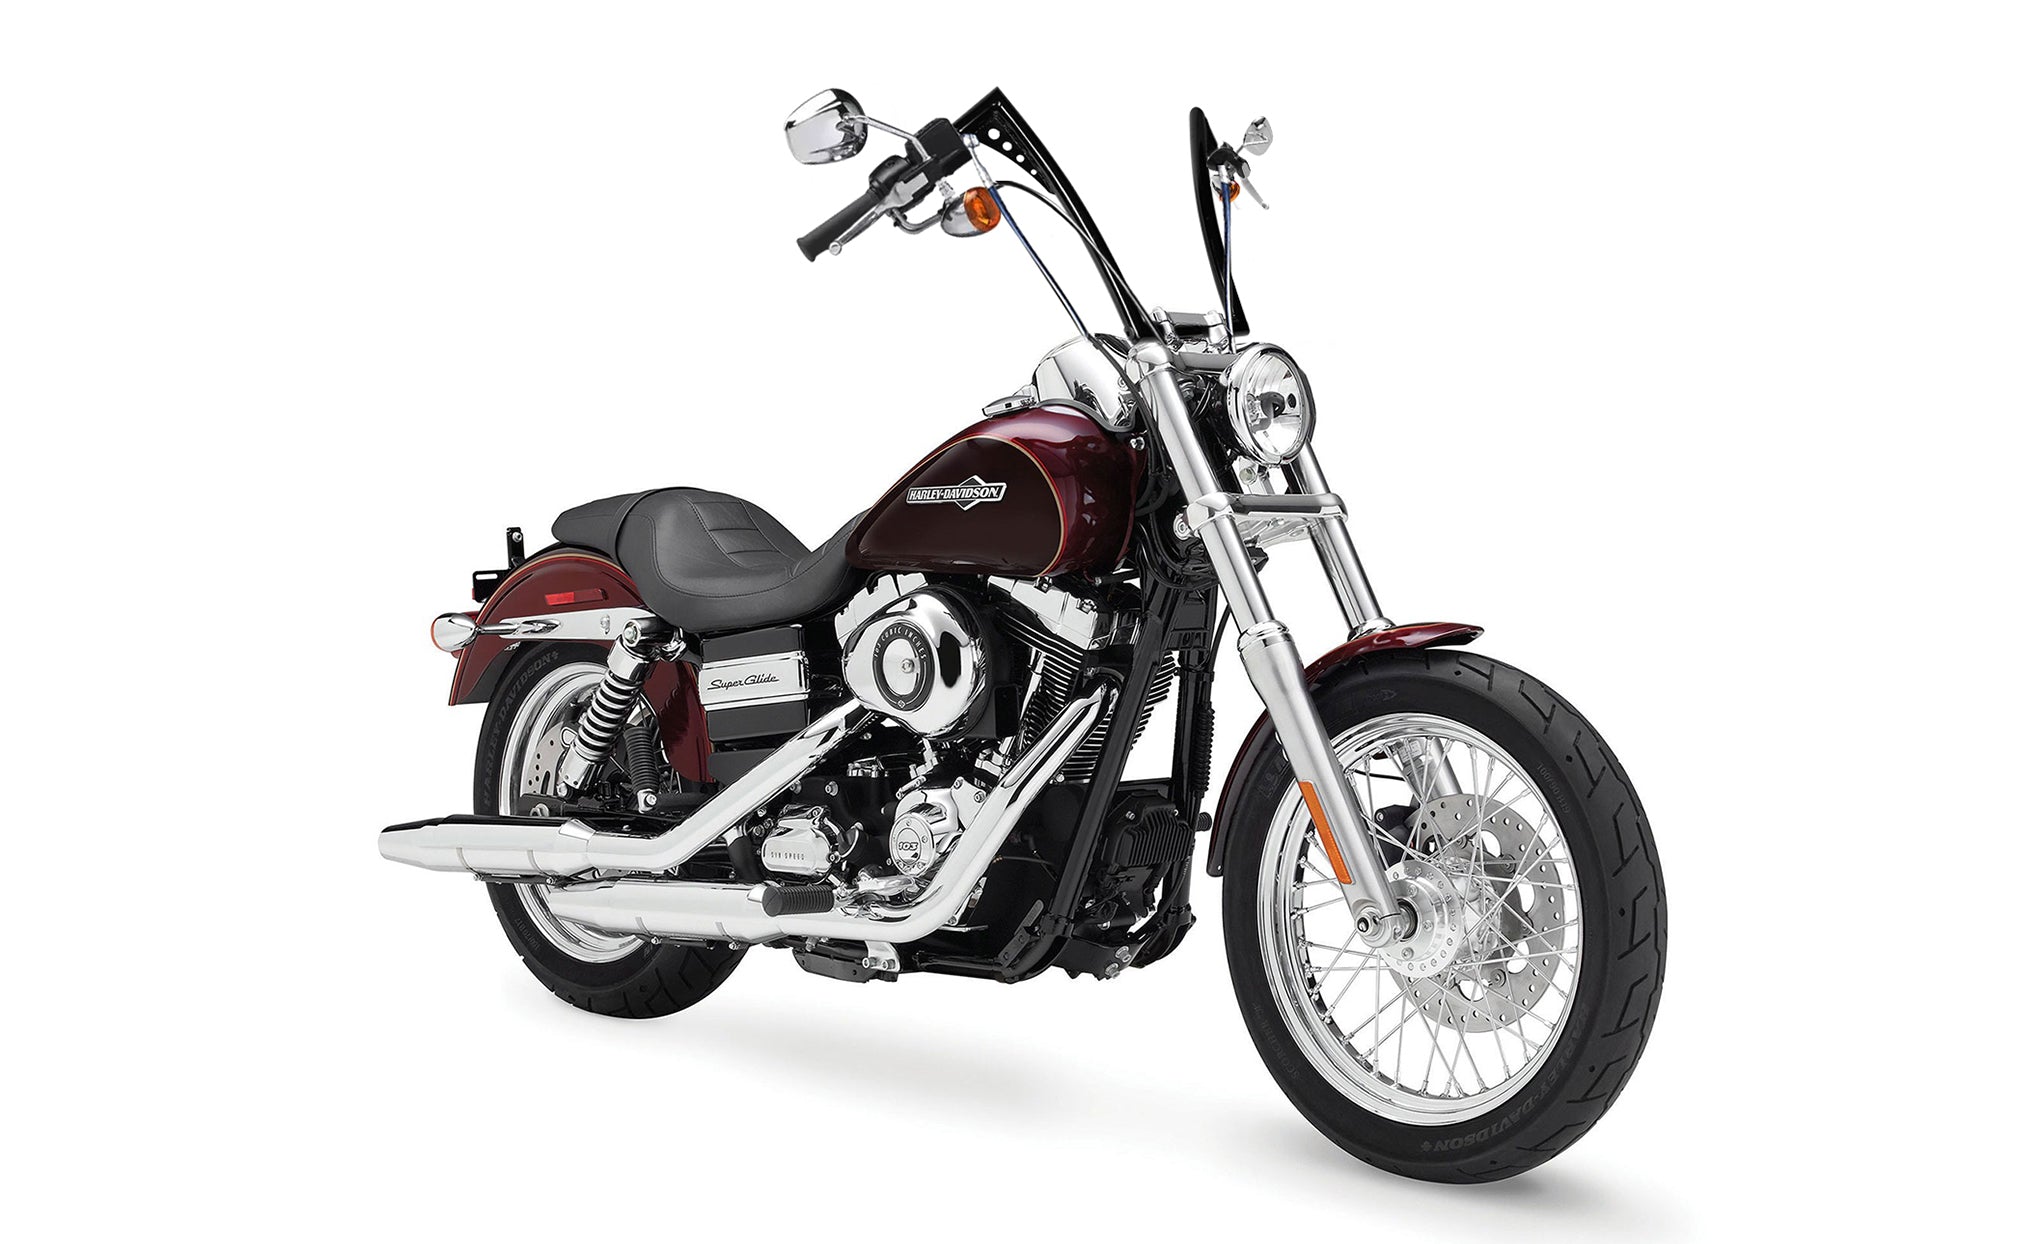 Viking Iron Born 12" Handlebar For Harley Dyna Super Glide FXD Gloss Black Bag on Bike View @expand